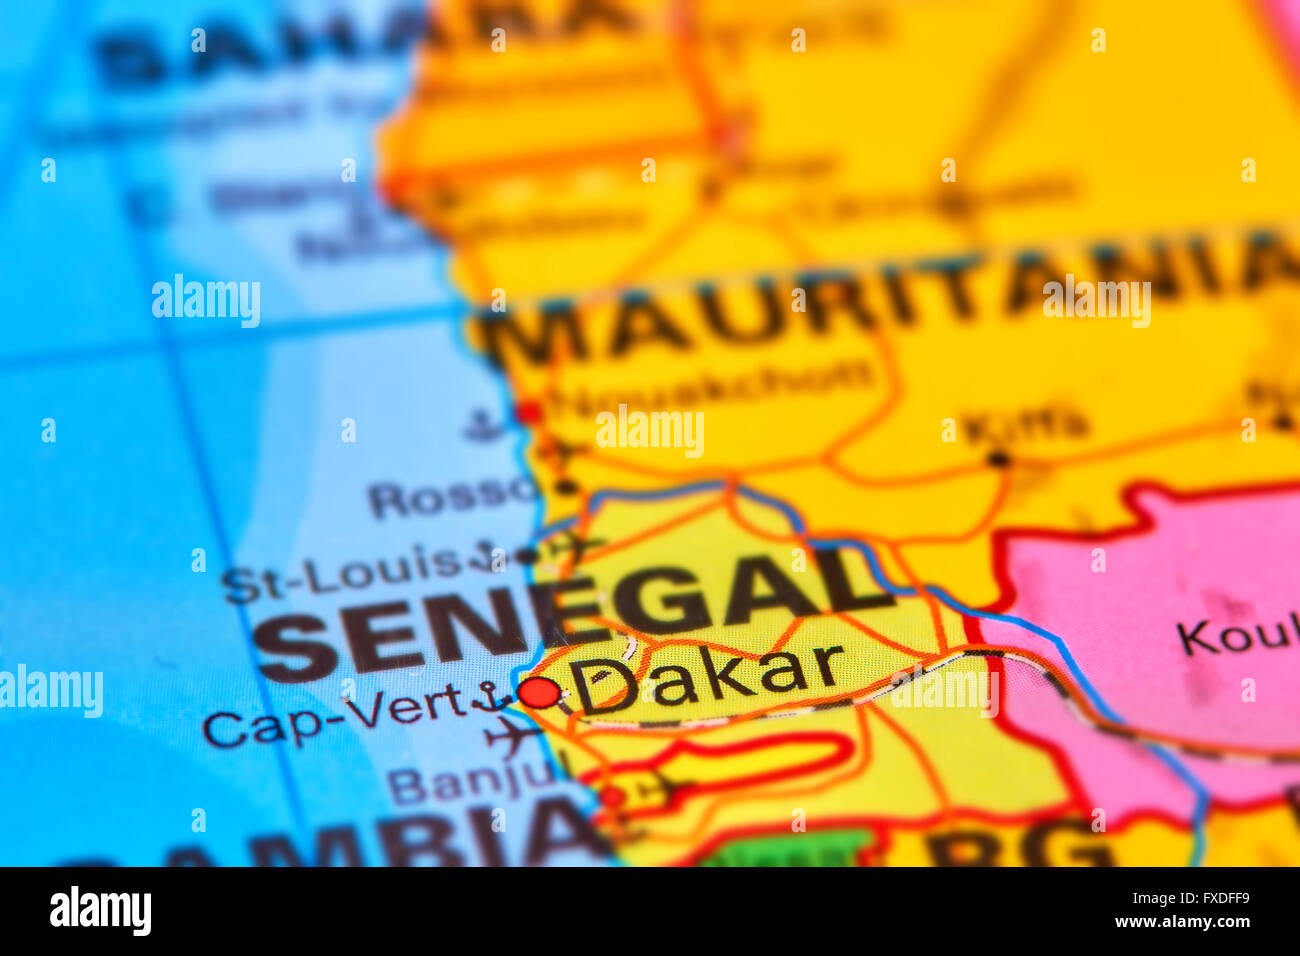 Dakar, Capital City of Senegal in Africa on the World Map Stock Photo